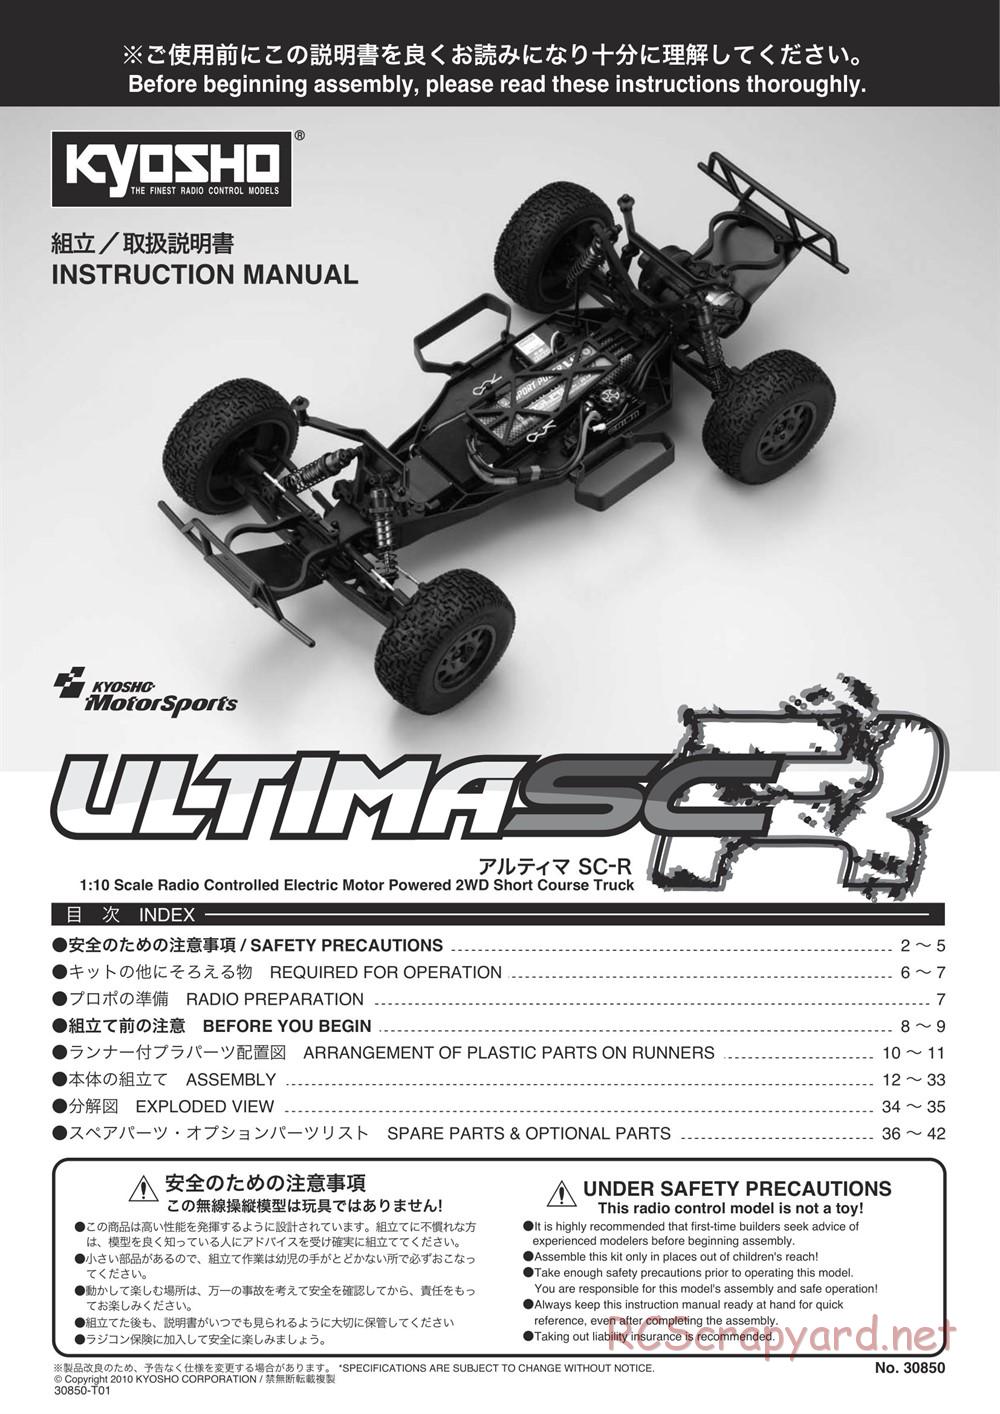 Kyosho - Ultima SCR - Manual - Page 1